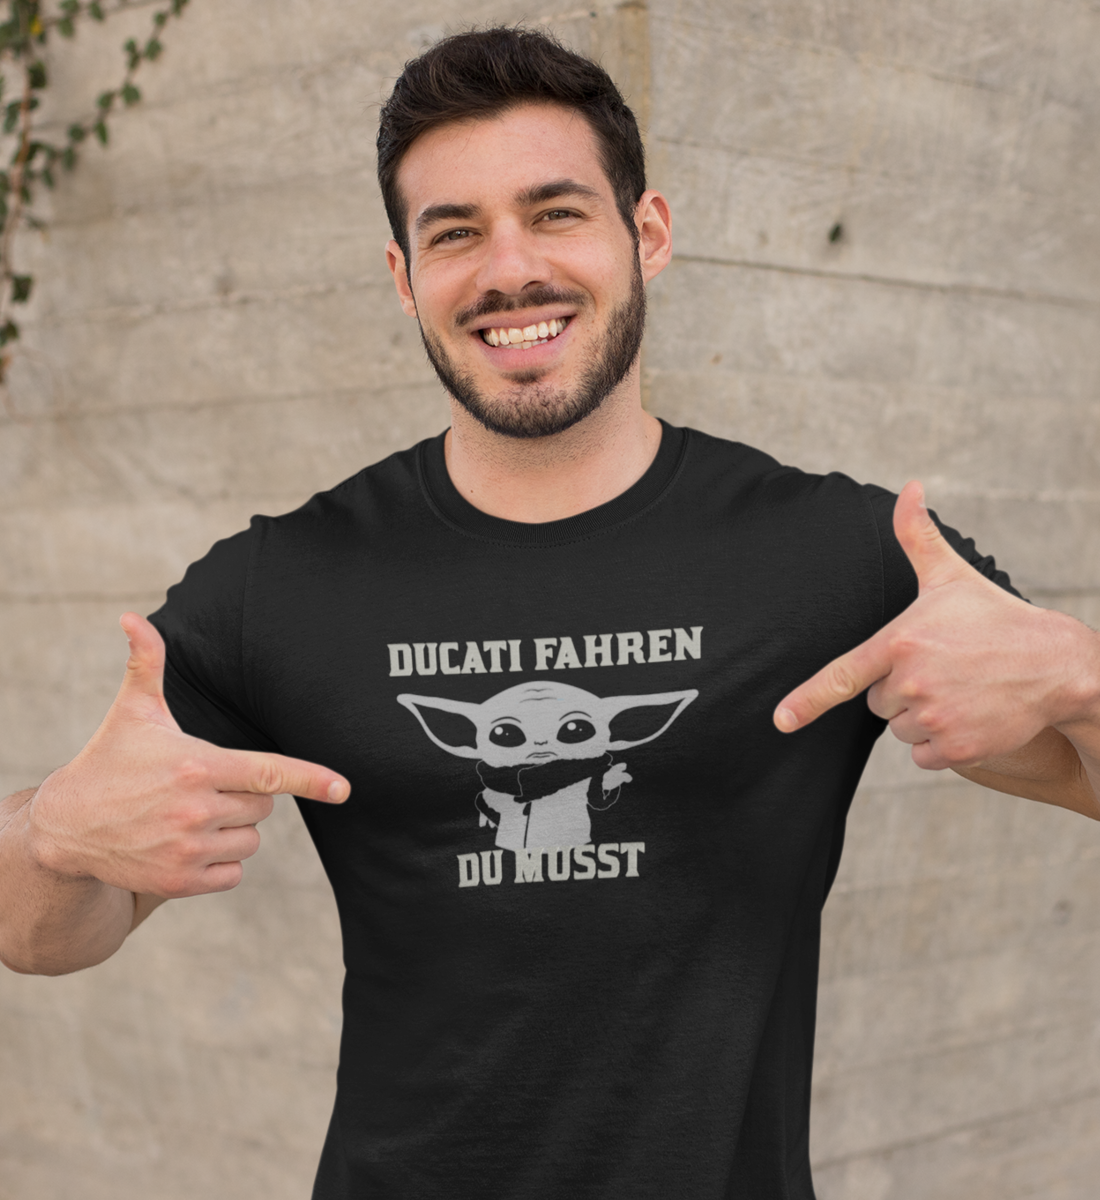 Ducati fahren du musst - Herren T-Shirt